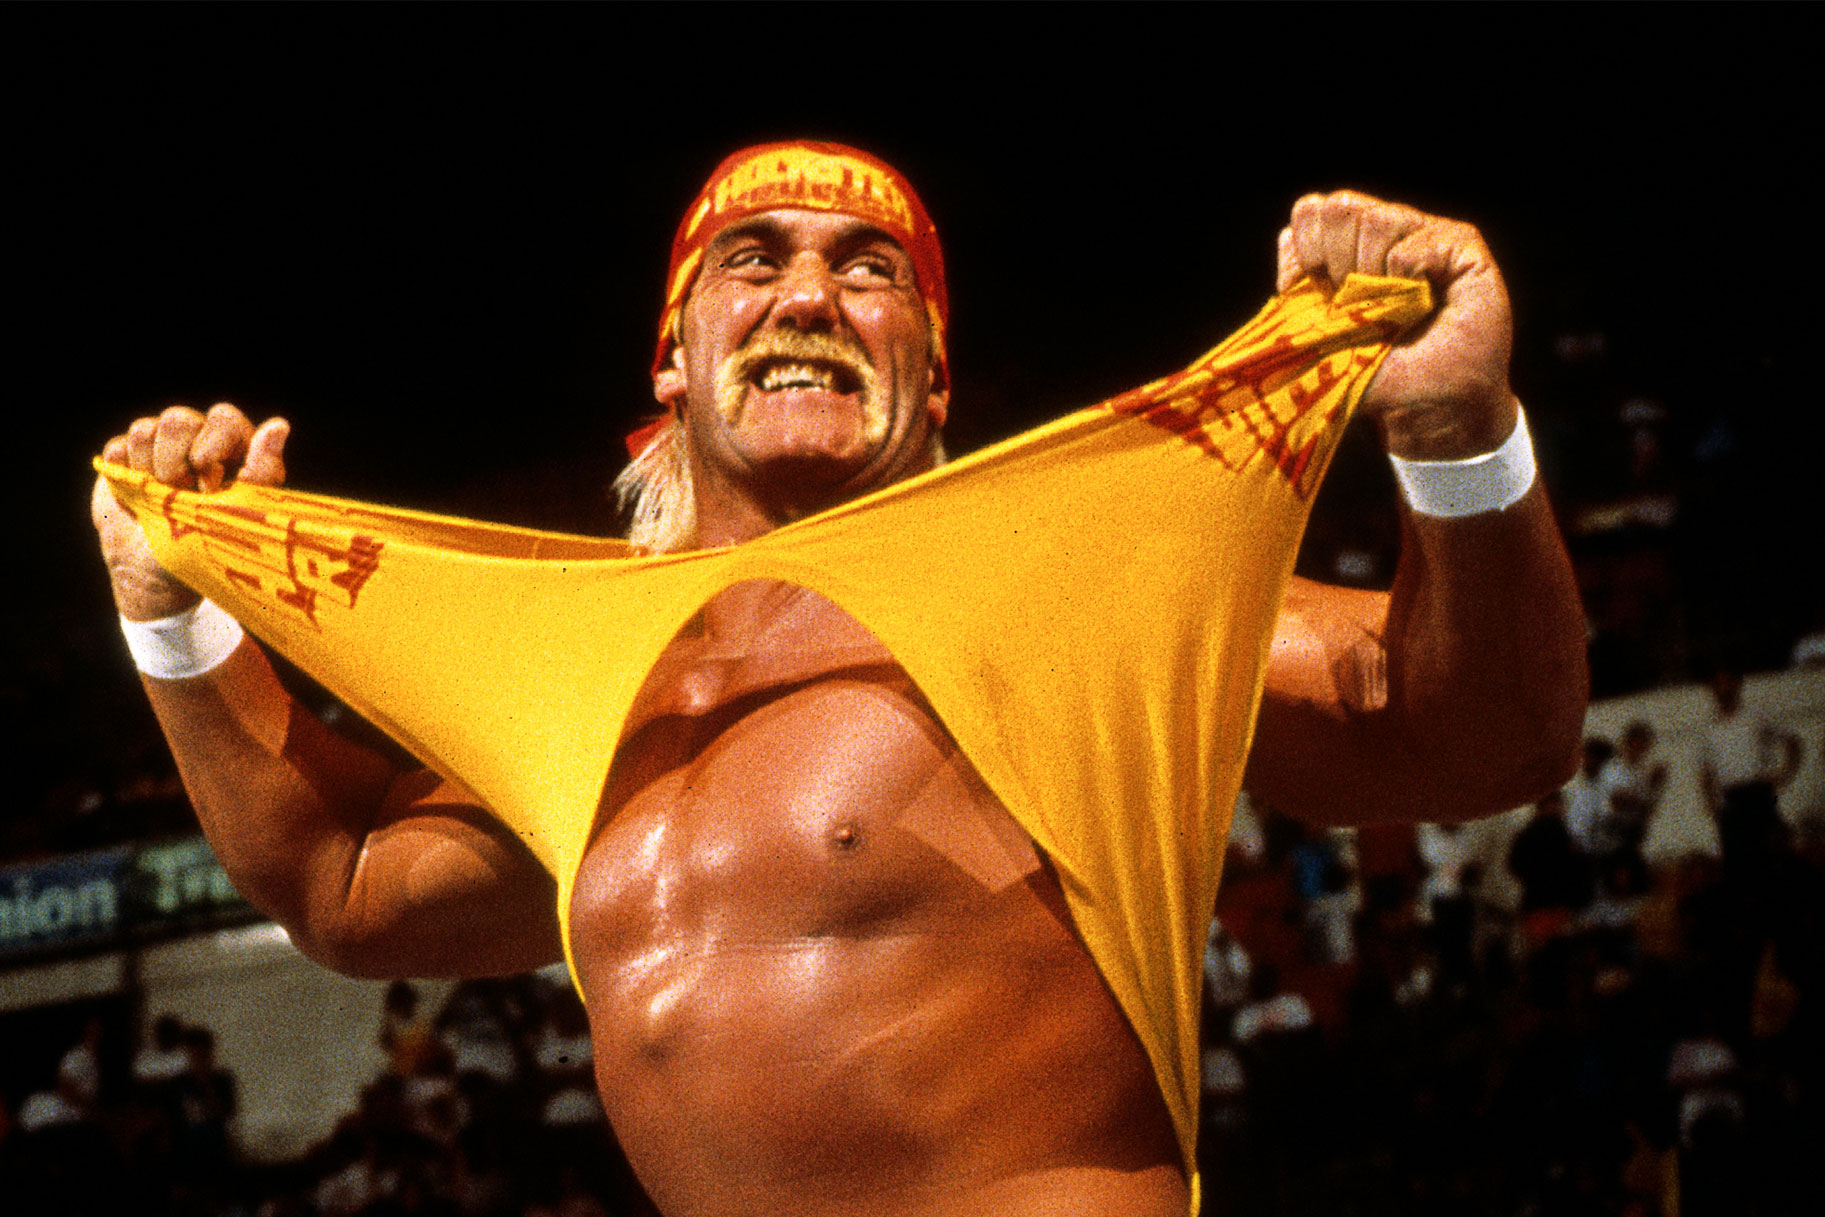 Hulk Hogan ripping his shirt off